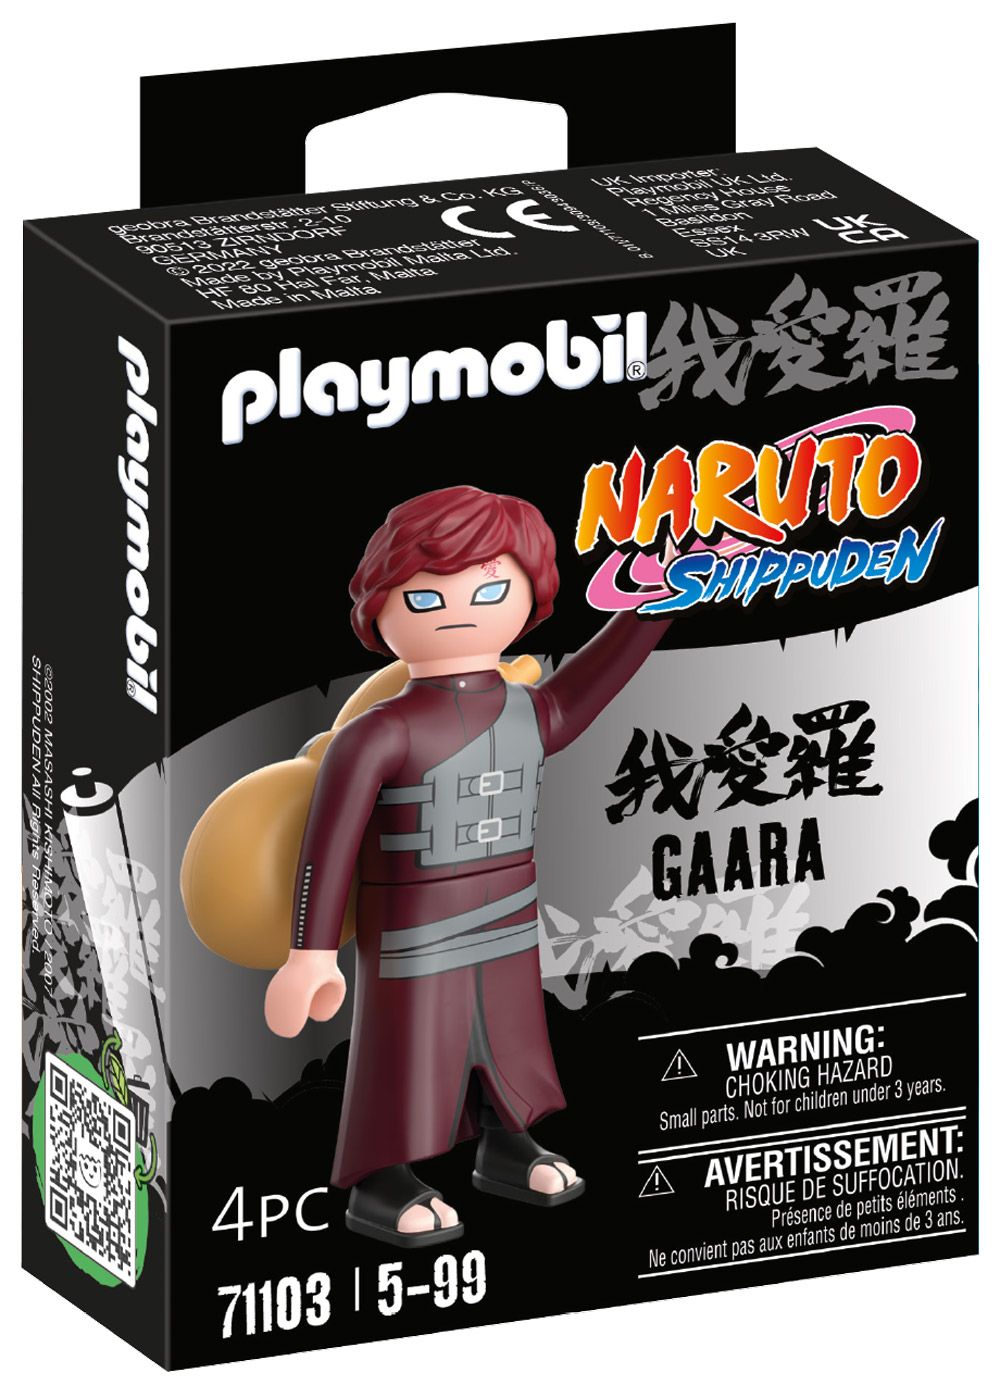 Playmobil Naruto Shippuden 71103 pas cher, Gaara